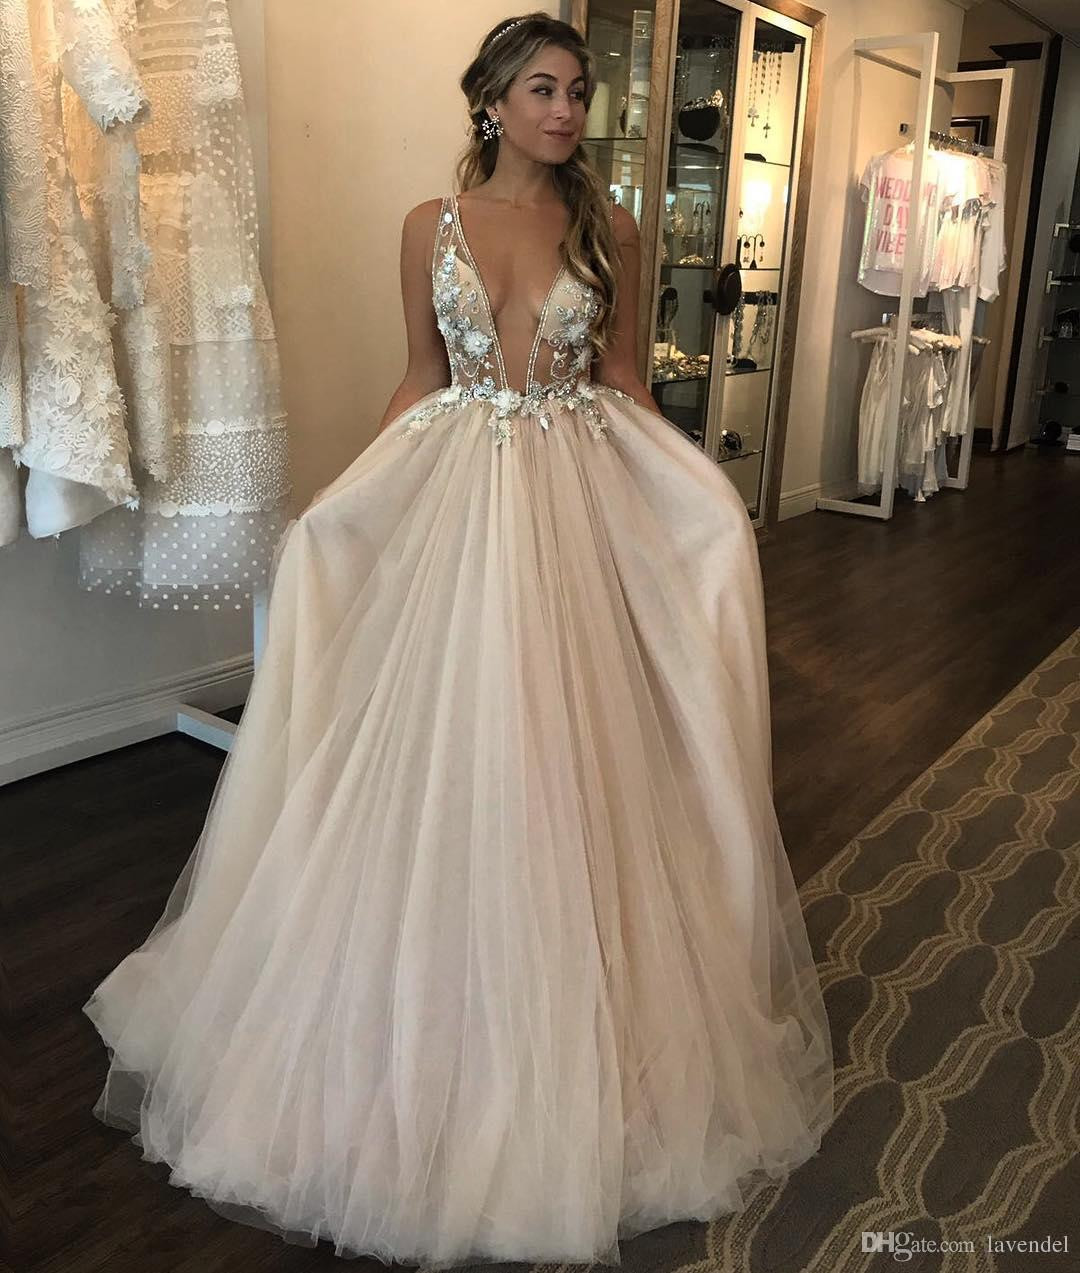 Deep V Wedding Dress
 Discount 2018 New Deep V Neck Puffy Tulle Wedding Dress 3D Floral Appliques Sheer Bodice Bridal